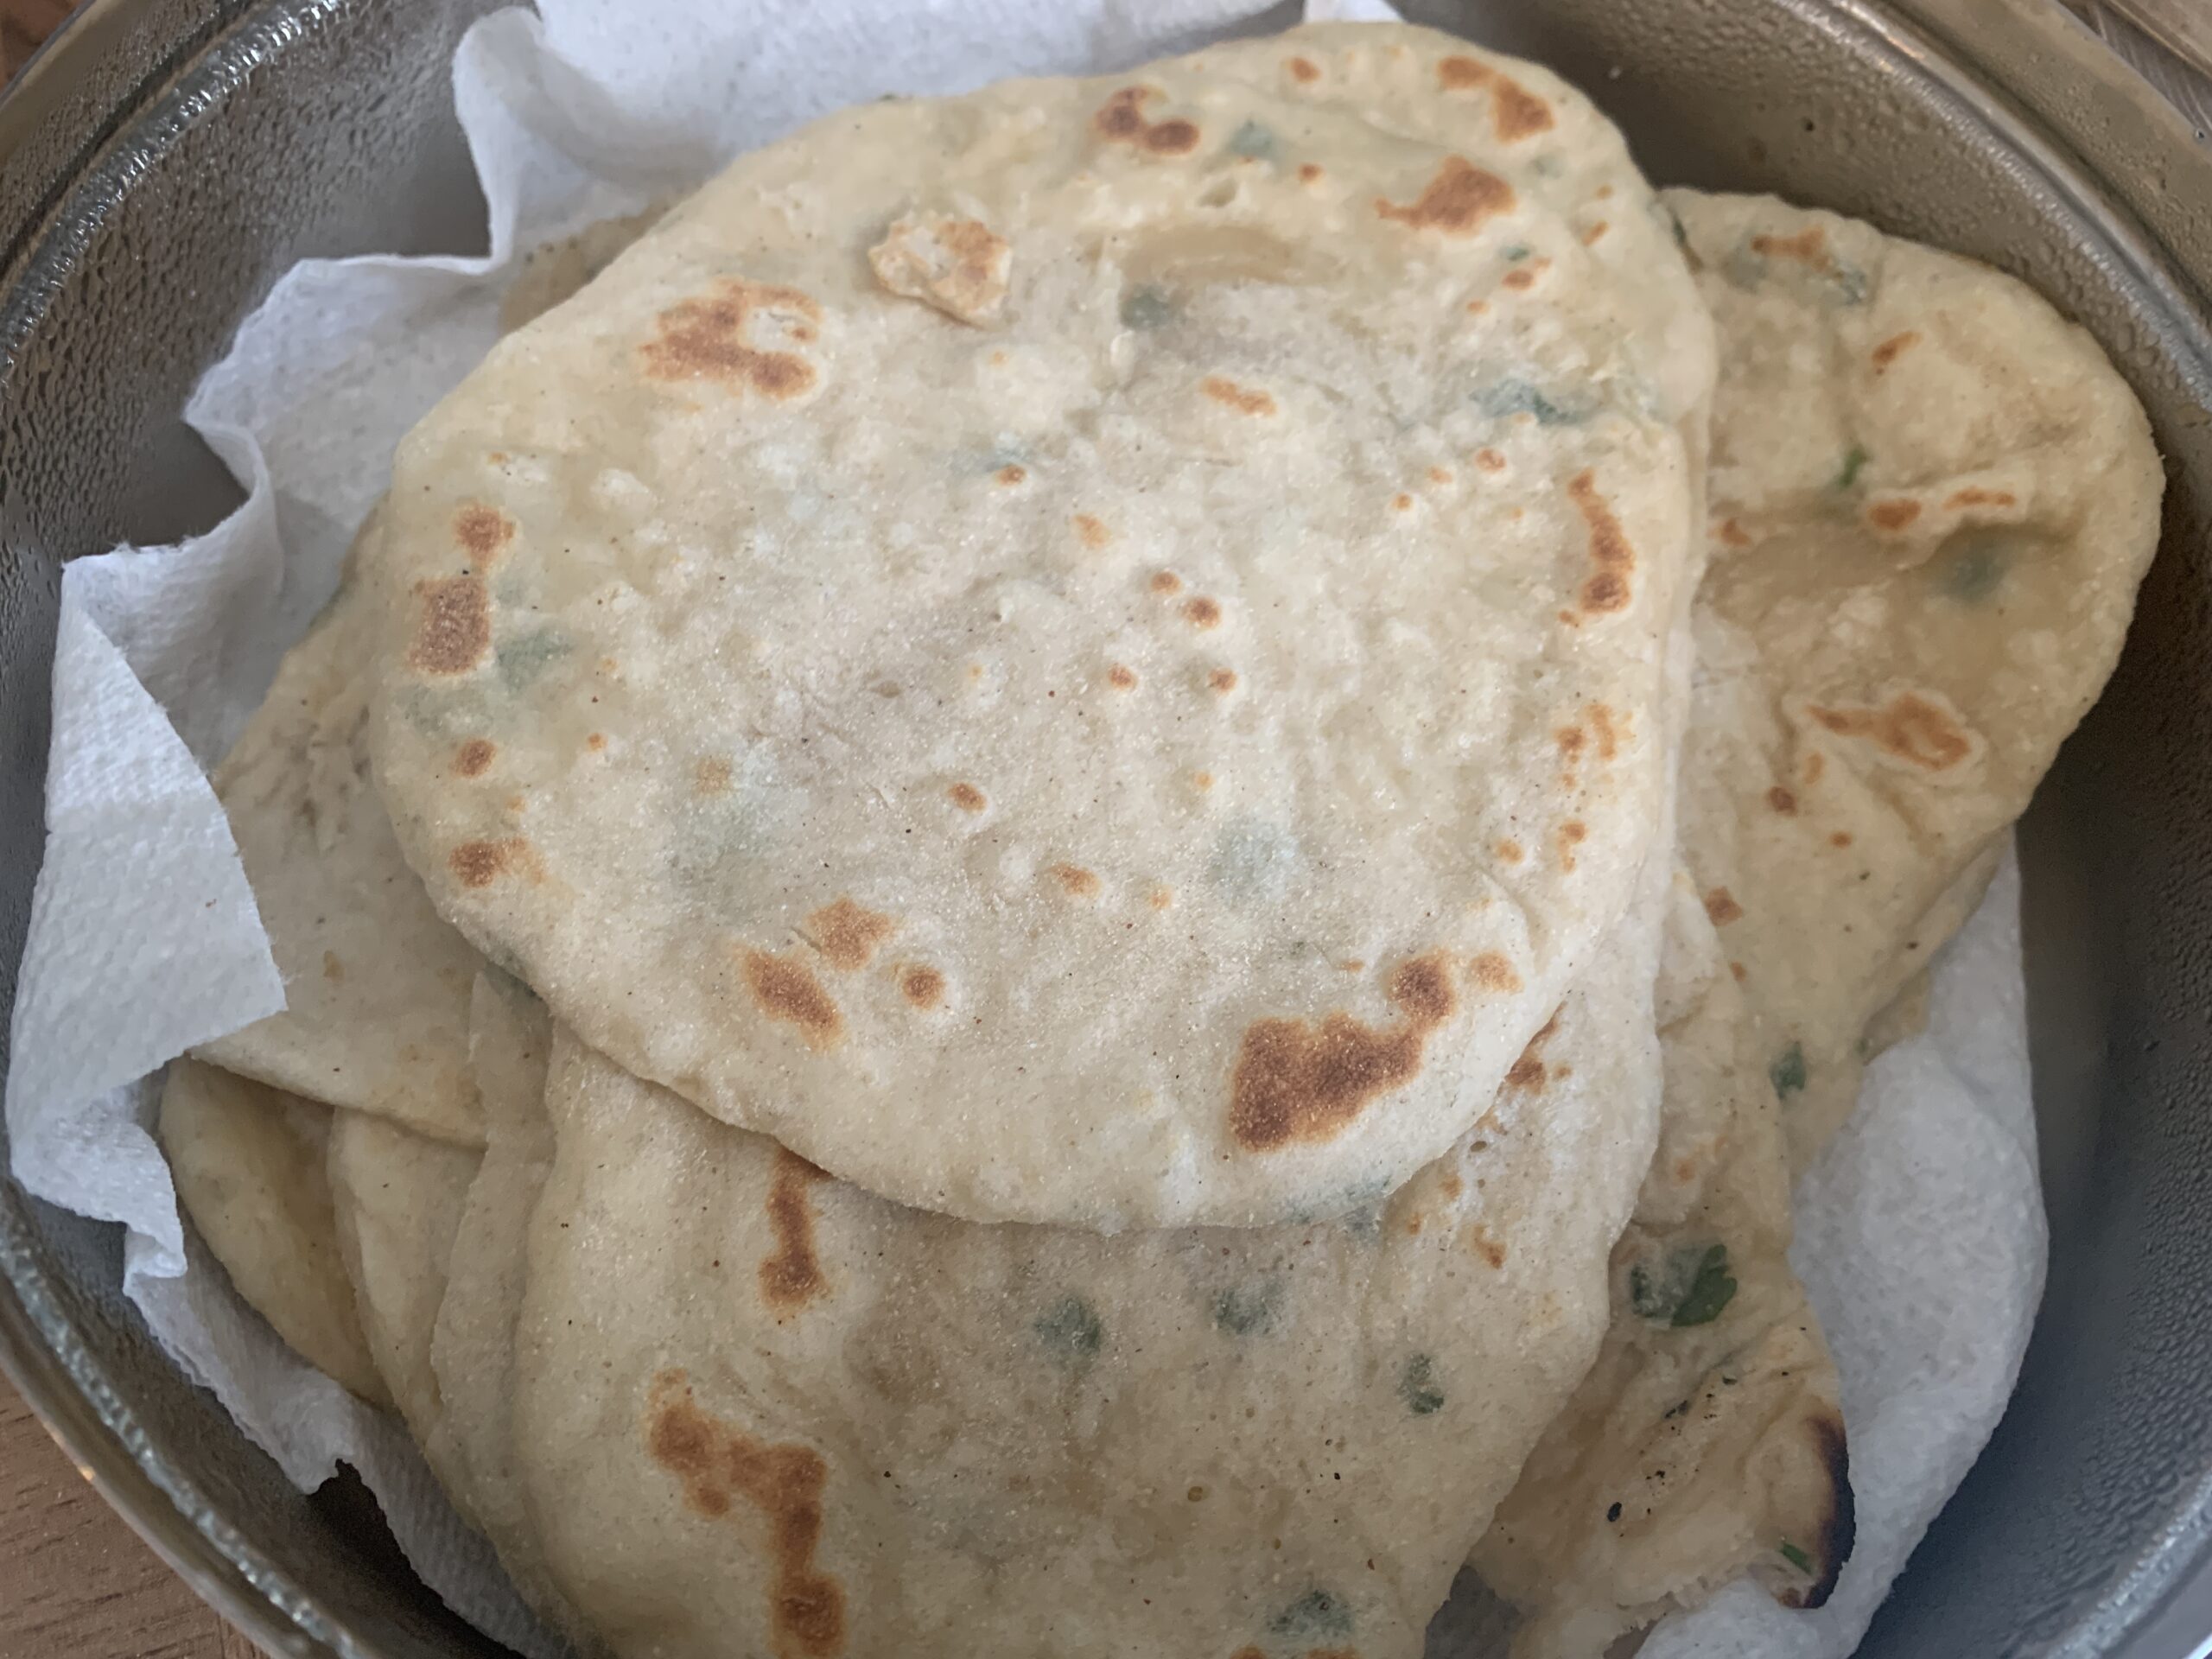 Delhi Wale Kulche Recipe (Tawa Bread)